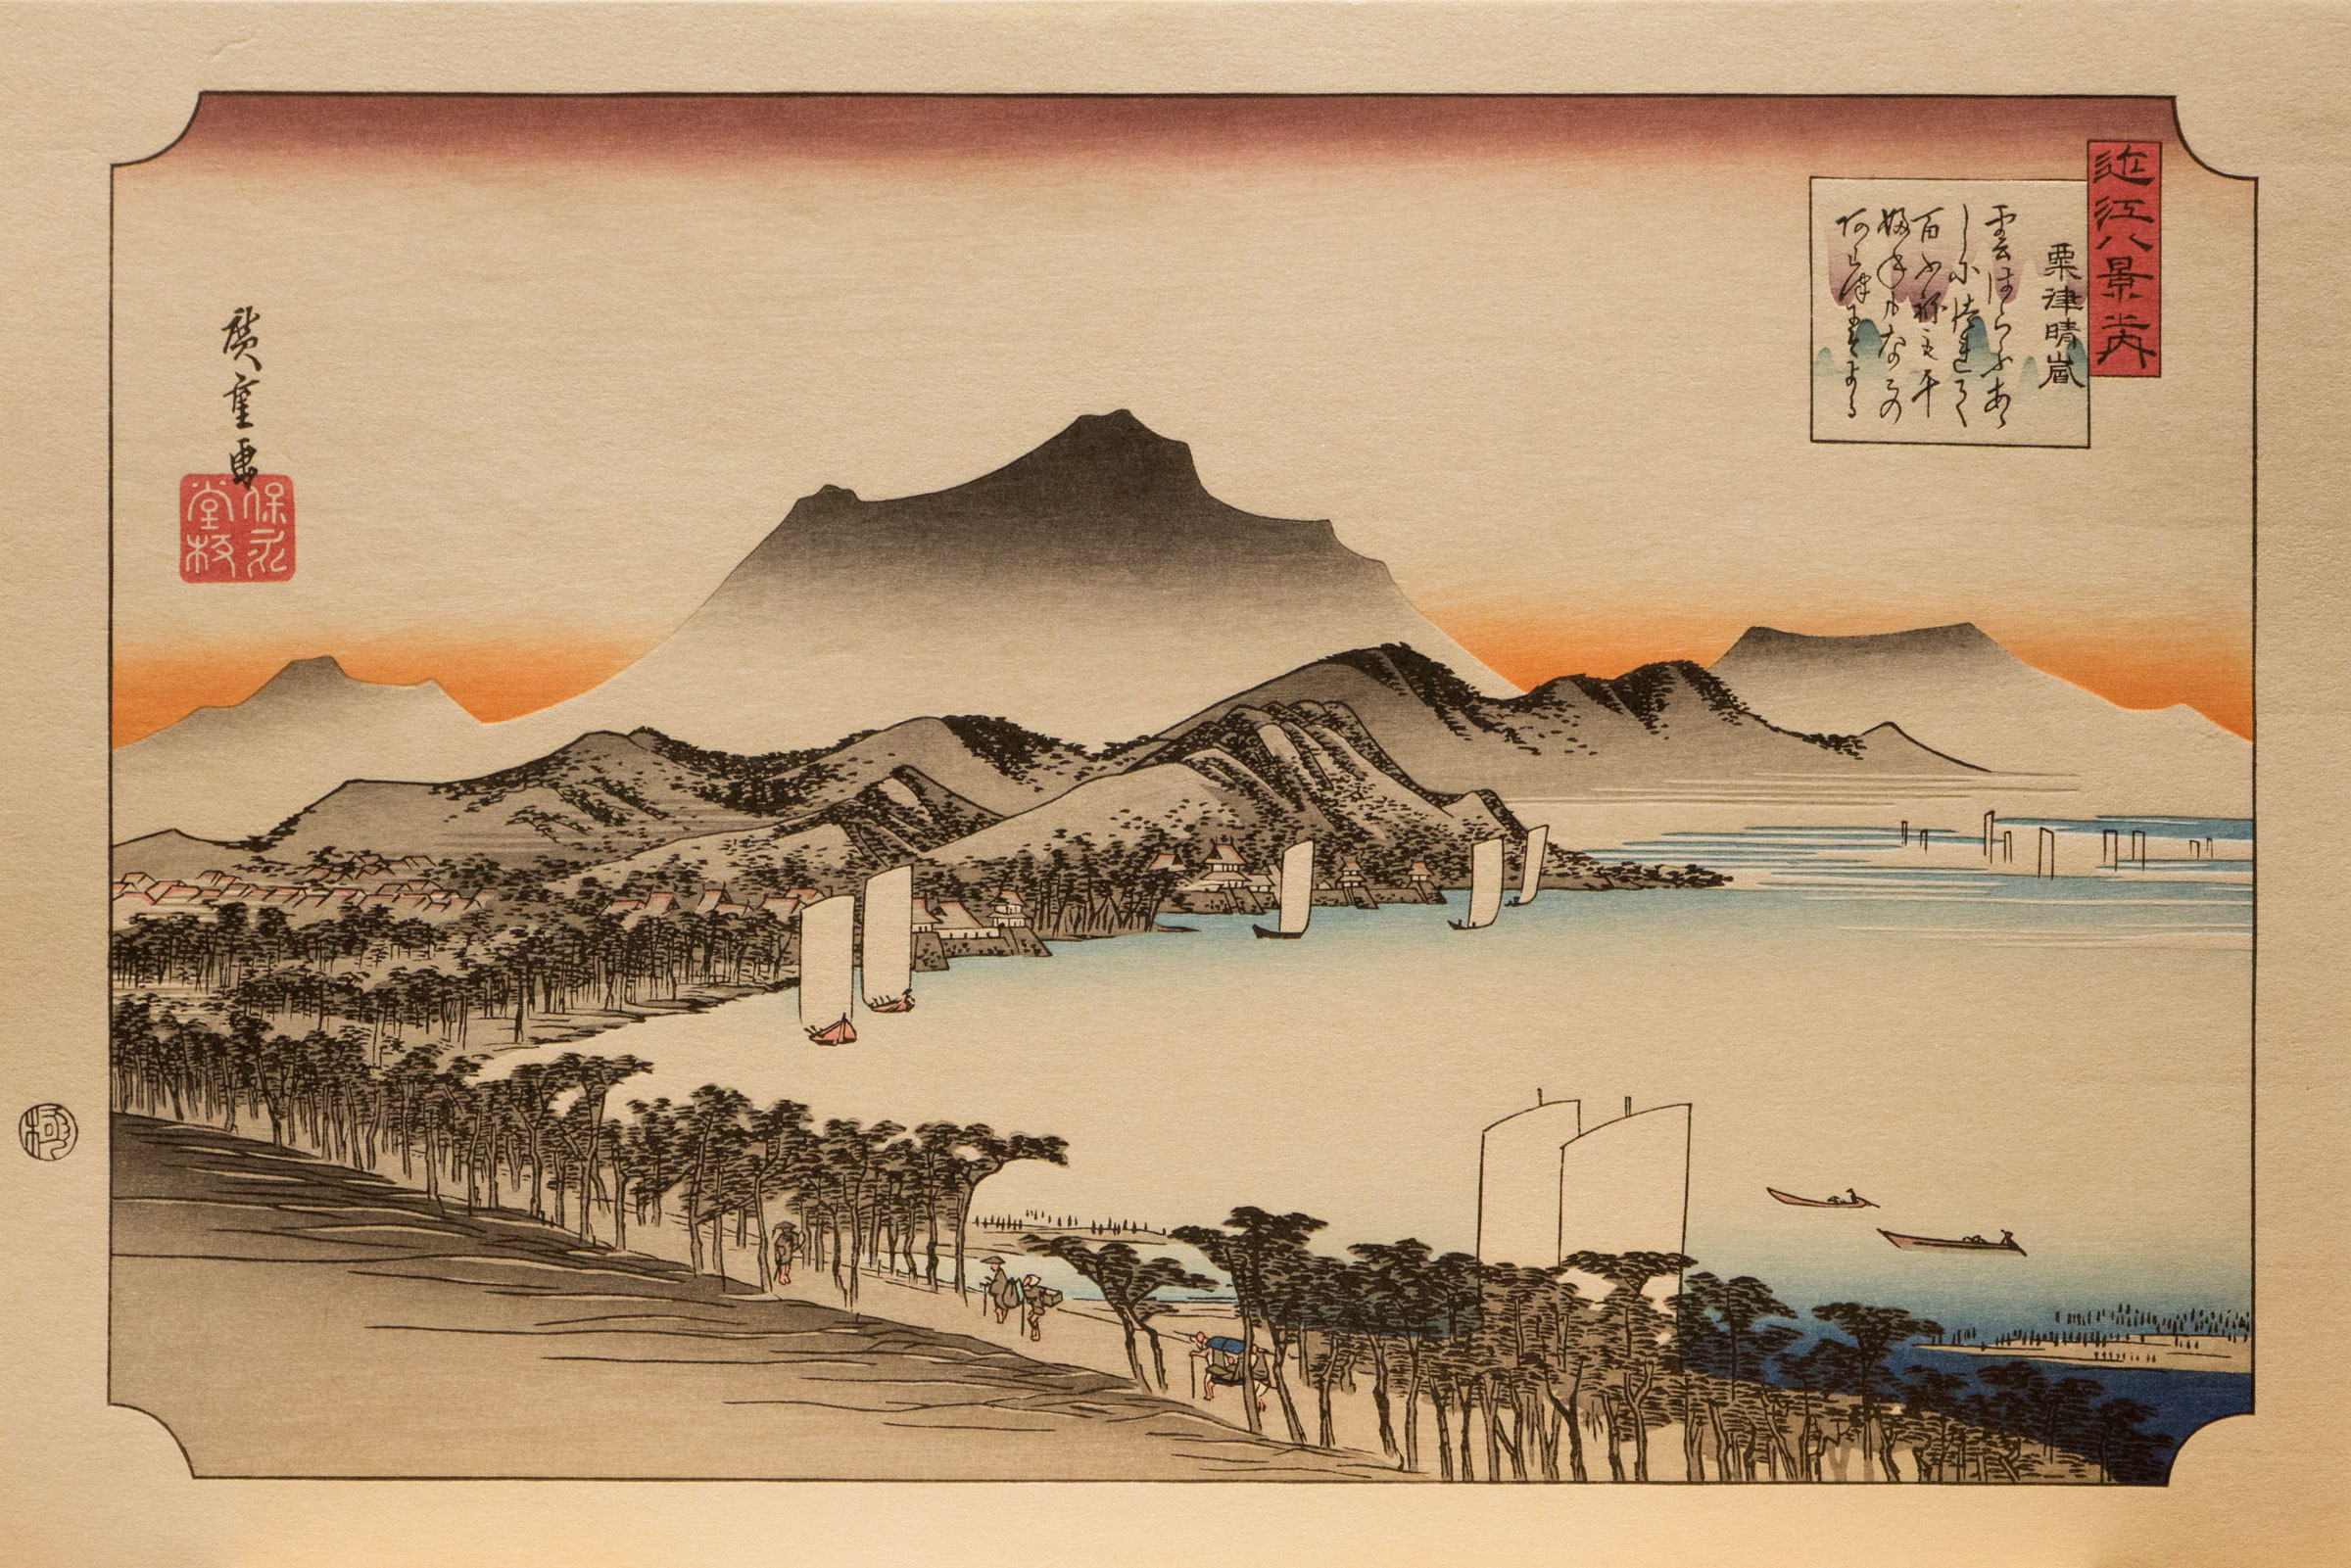 Utagawa Hiroshige Woodblock Print Japanese Art Traditional Artwork Mountains Boat Trees Shore Evenin 2400x1601